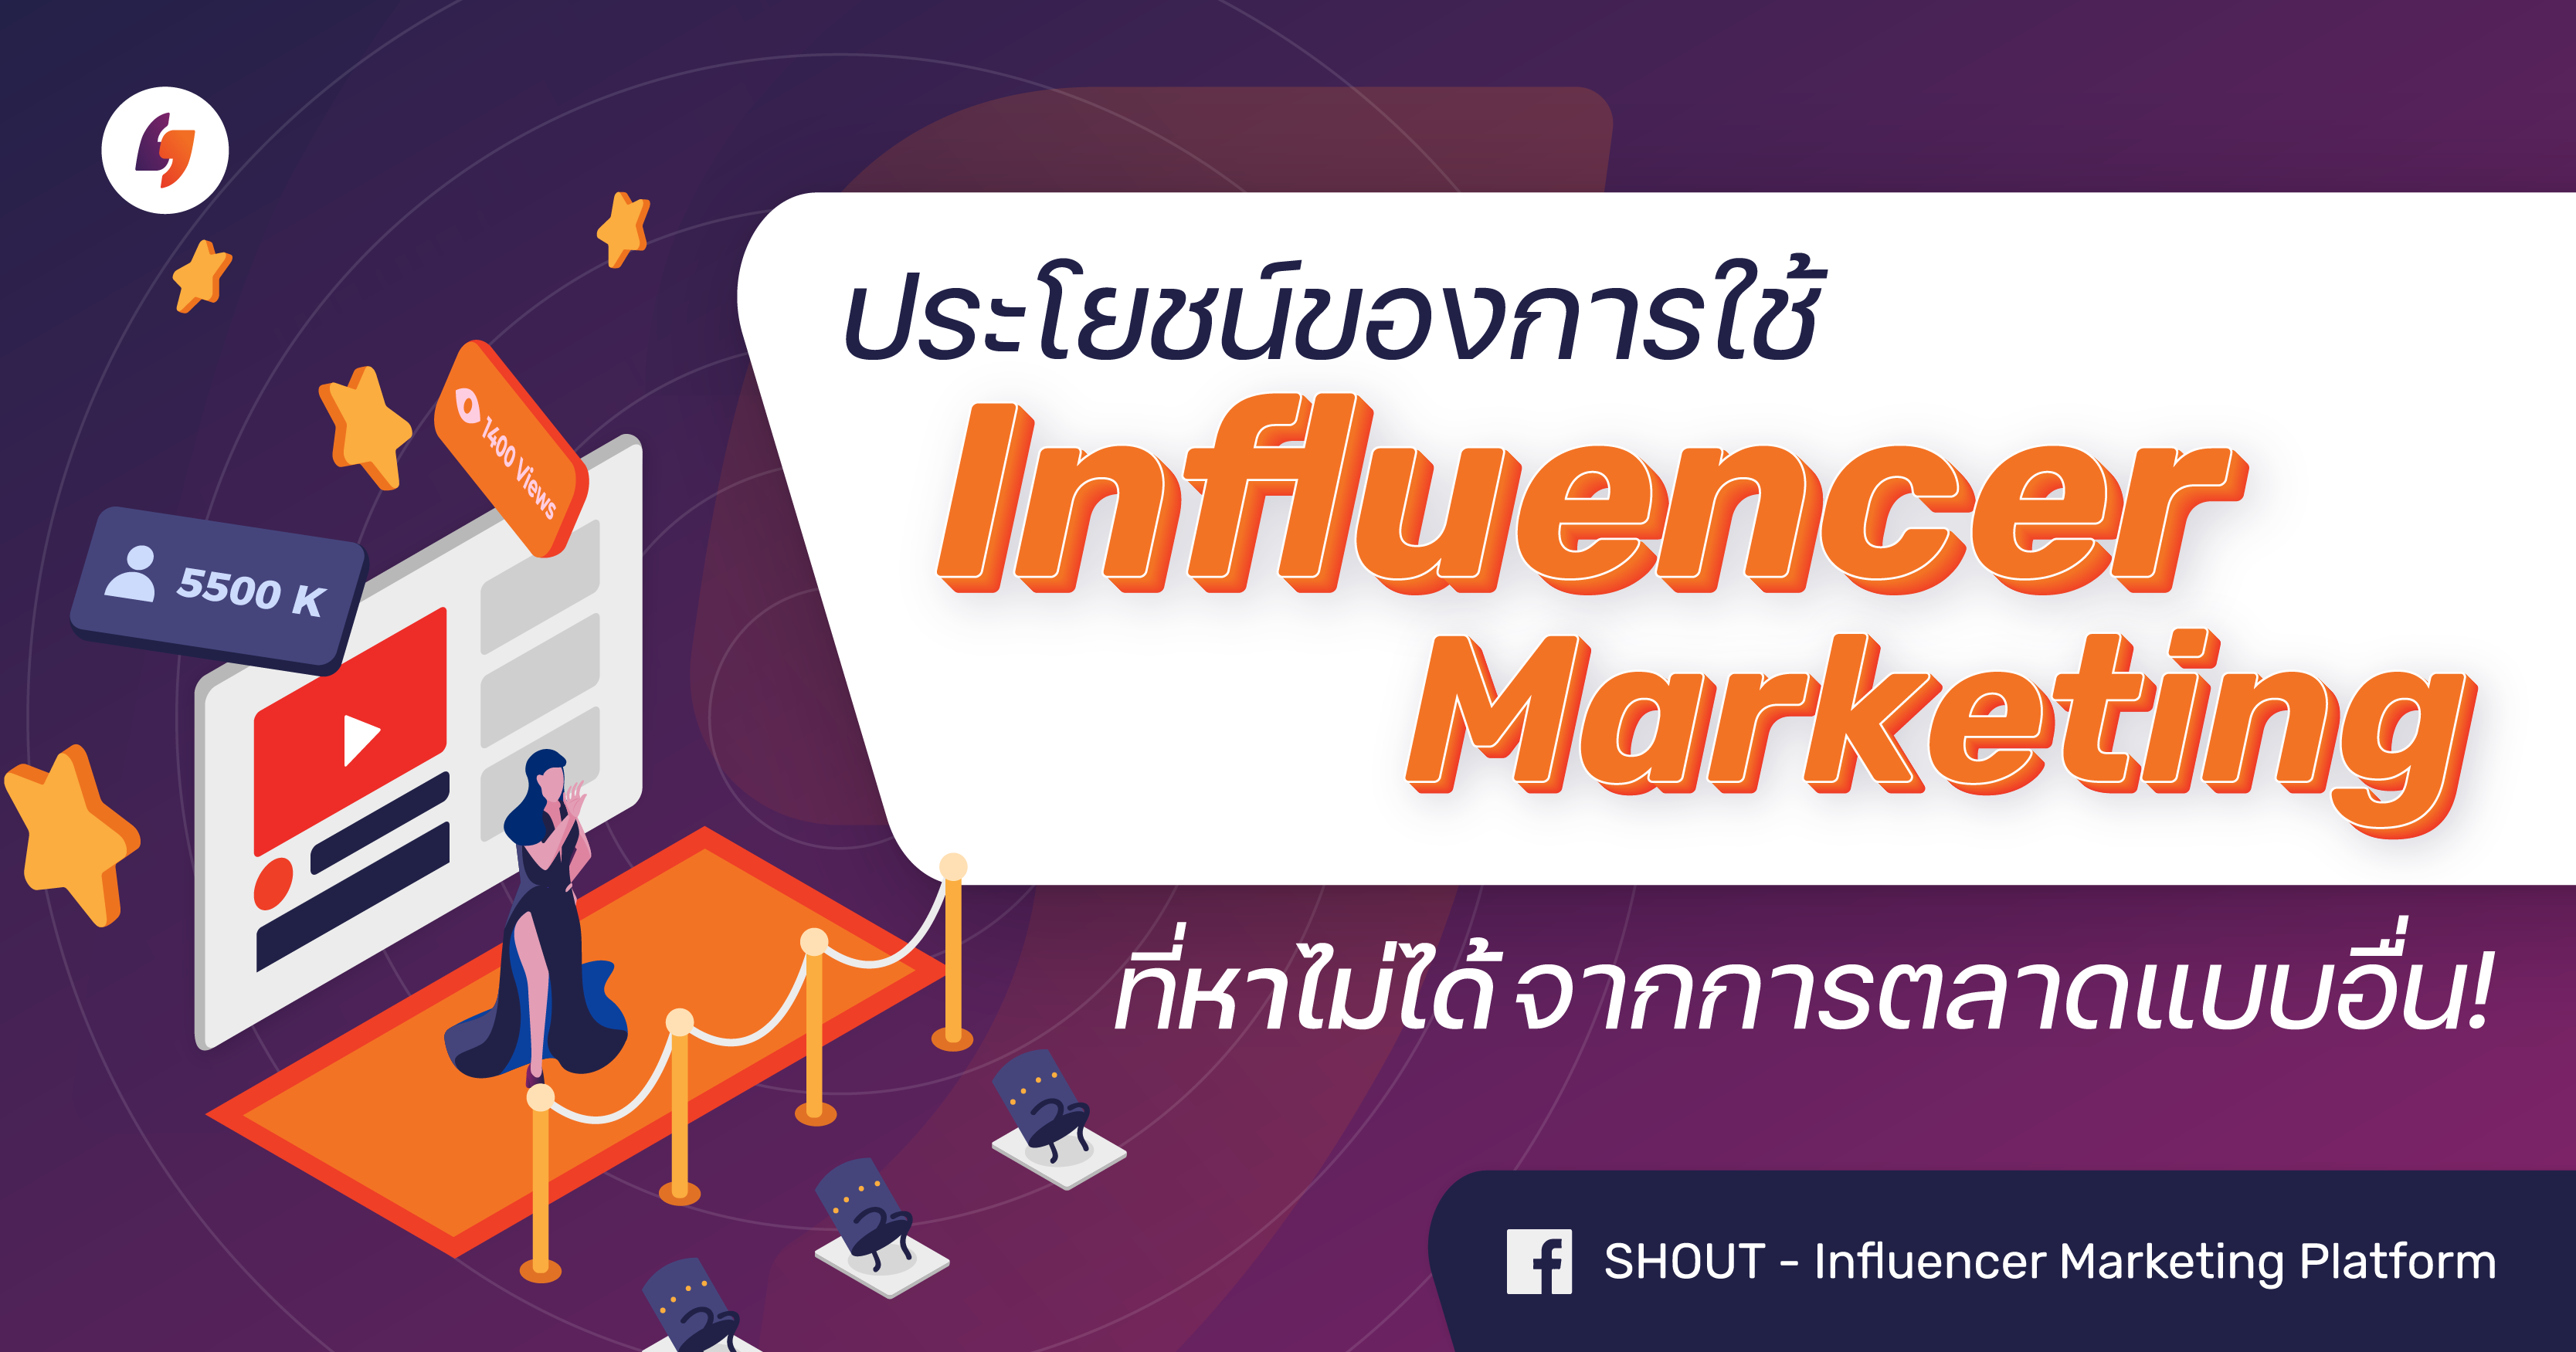 Cover Image for ประโยชน์ของการใช้ Influencer Marketing ที่หาไม่ได้จากการตลาดแบบอื่น! 